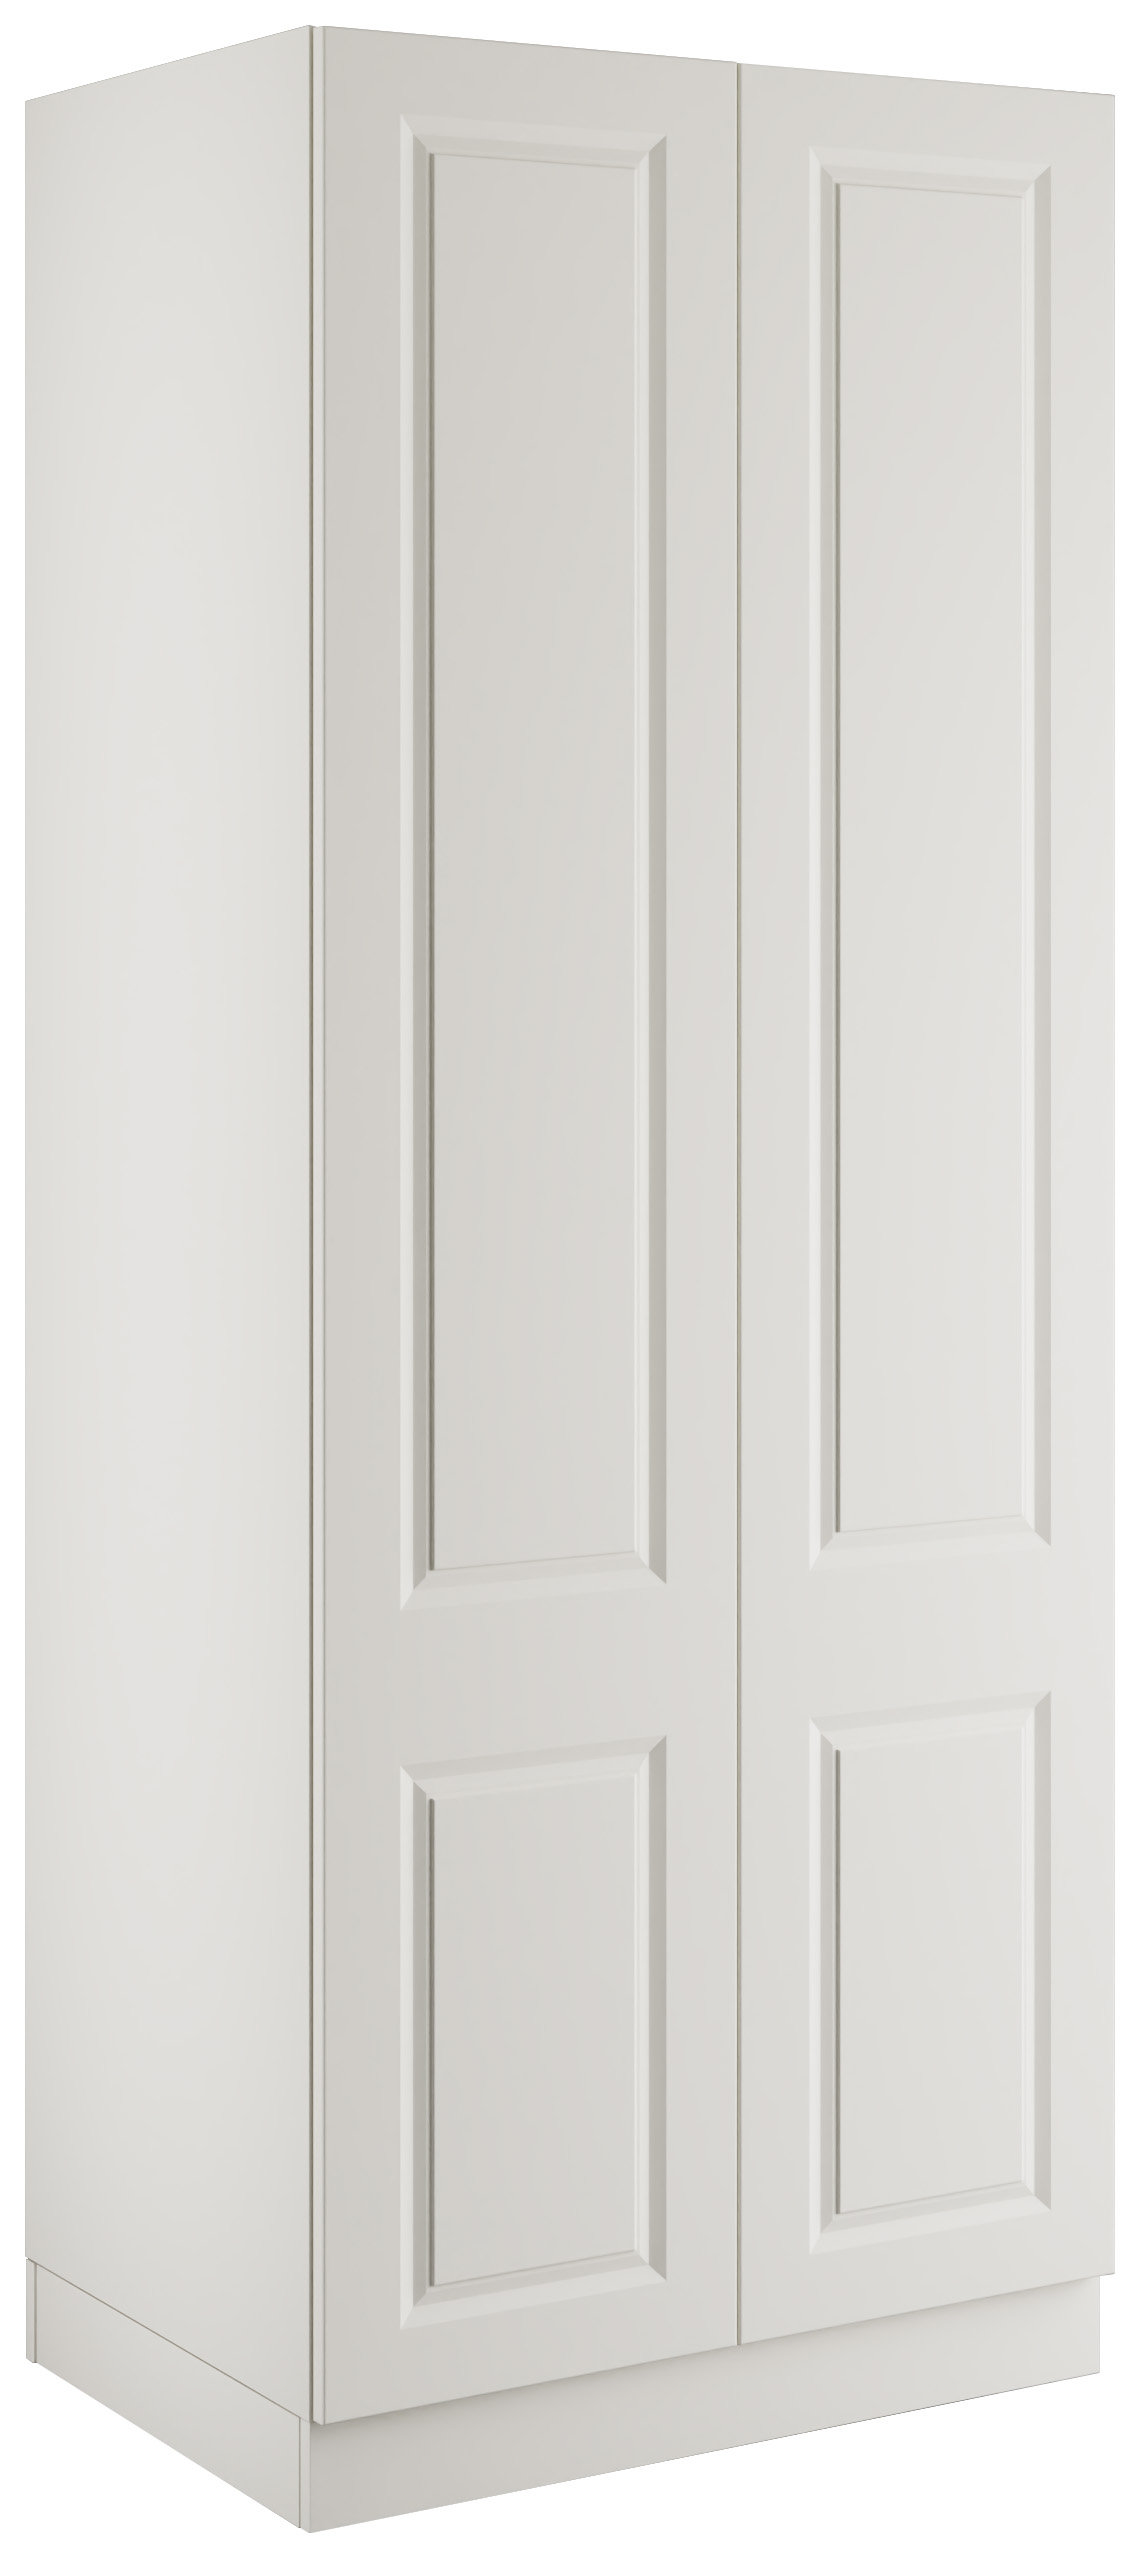 Harrogate White Double Wardrobe with Single Rail & Shelves - 900 x 2260 x 608mm